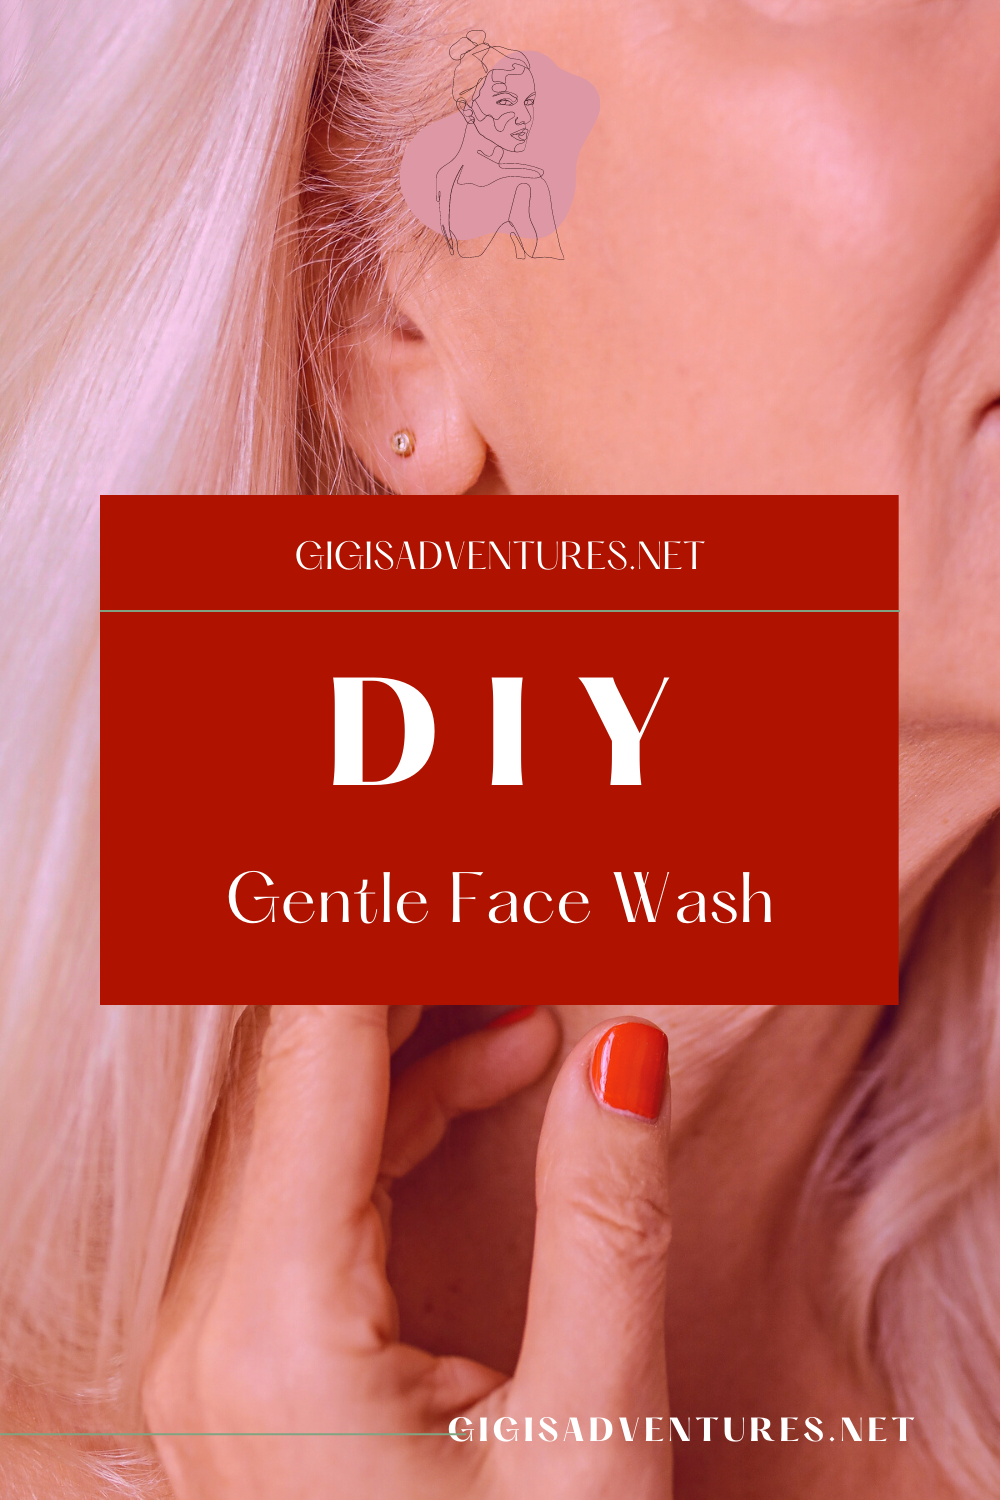 Gentle face wash, skin care, diy skin care, diy face wash, diy skin care for sensitive skin